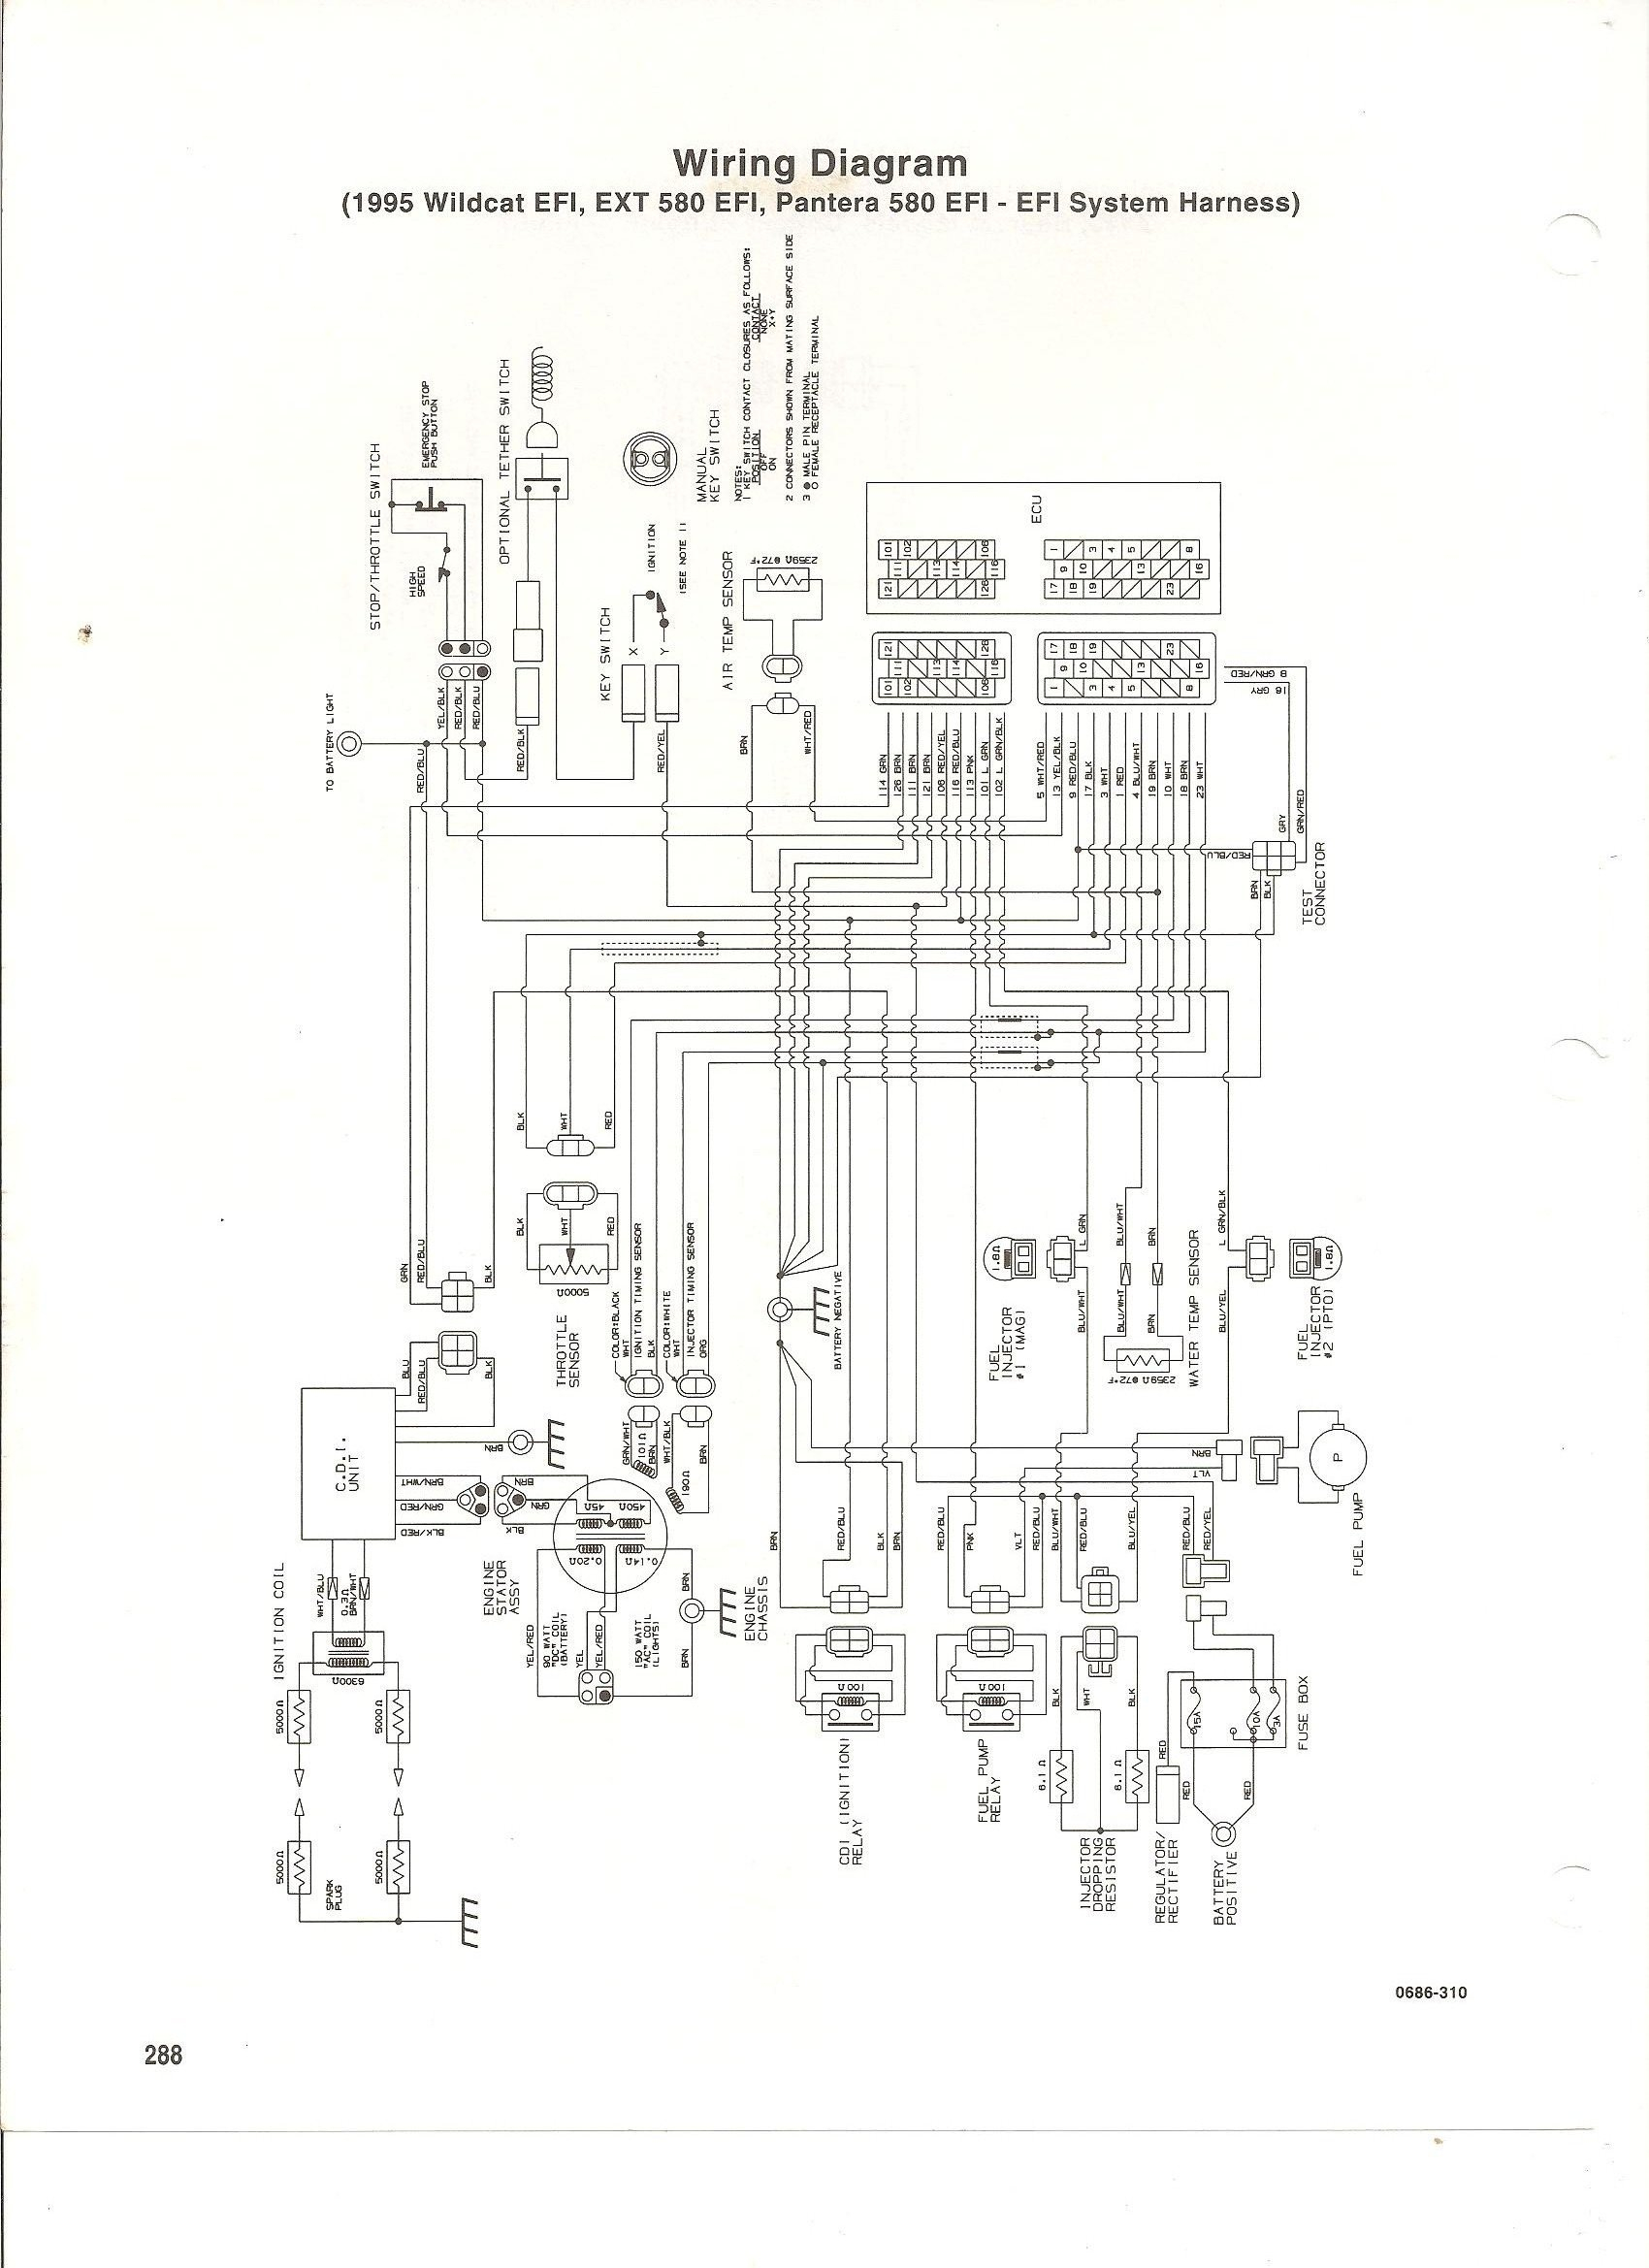 1994 Mountain Cat Ext 580 Wiring Diagram